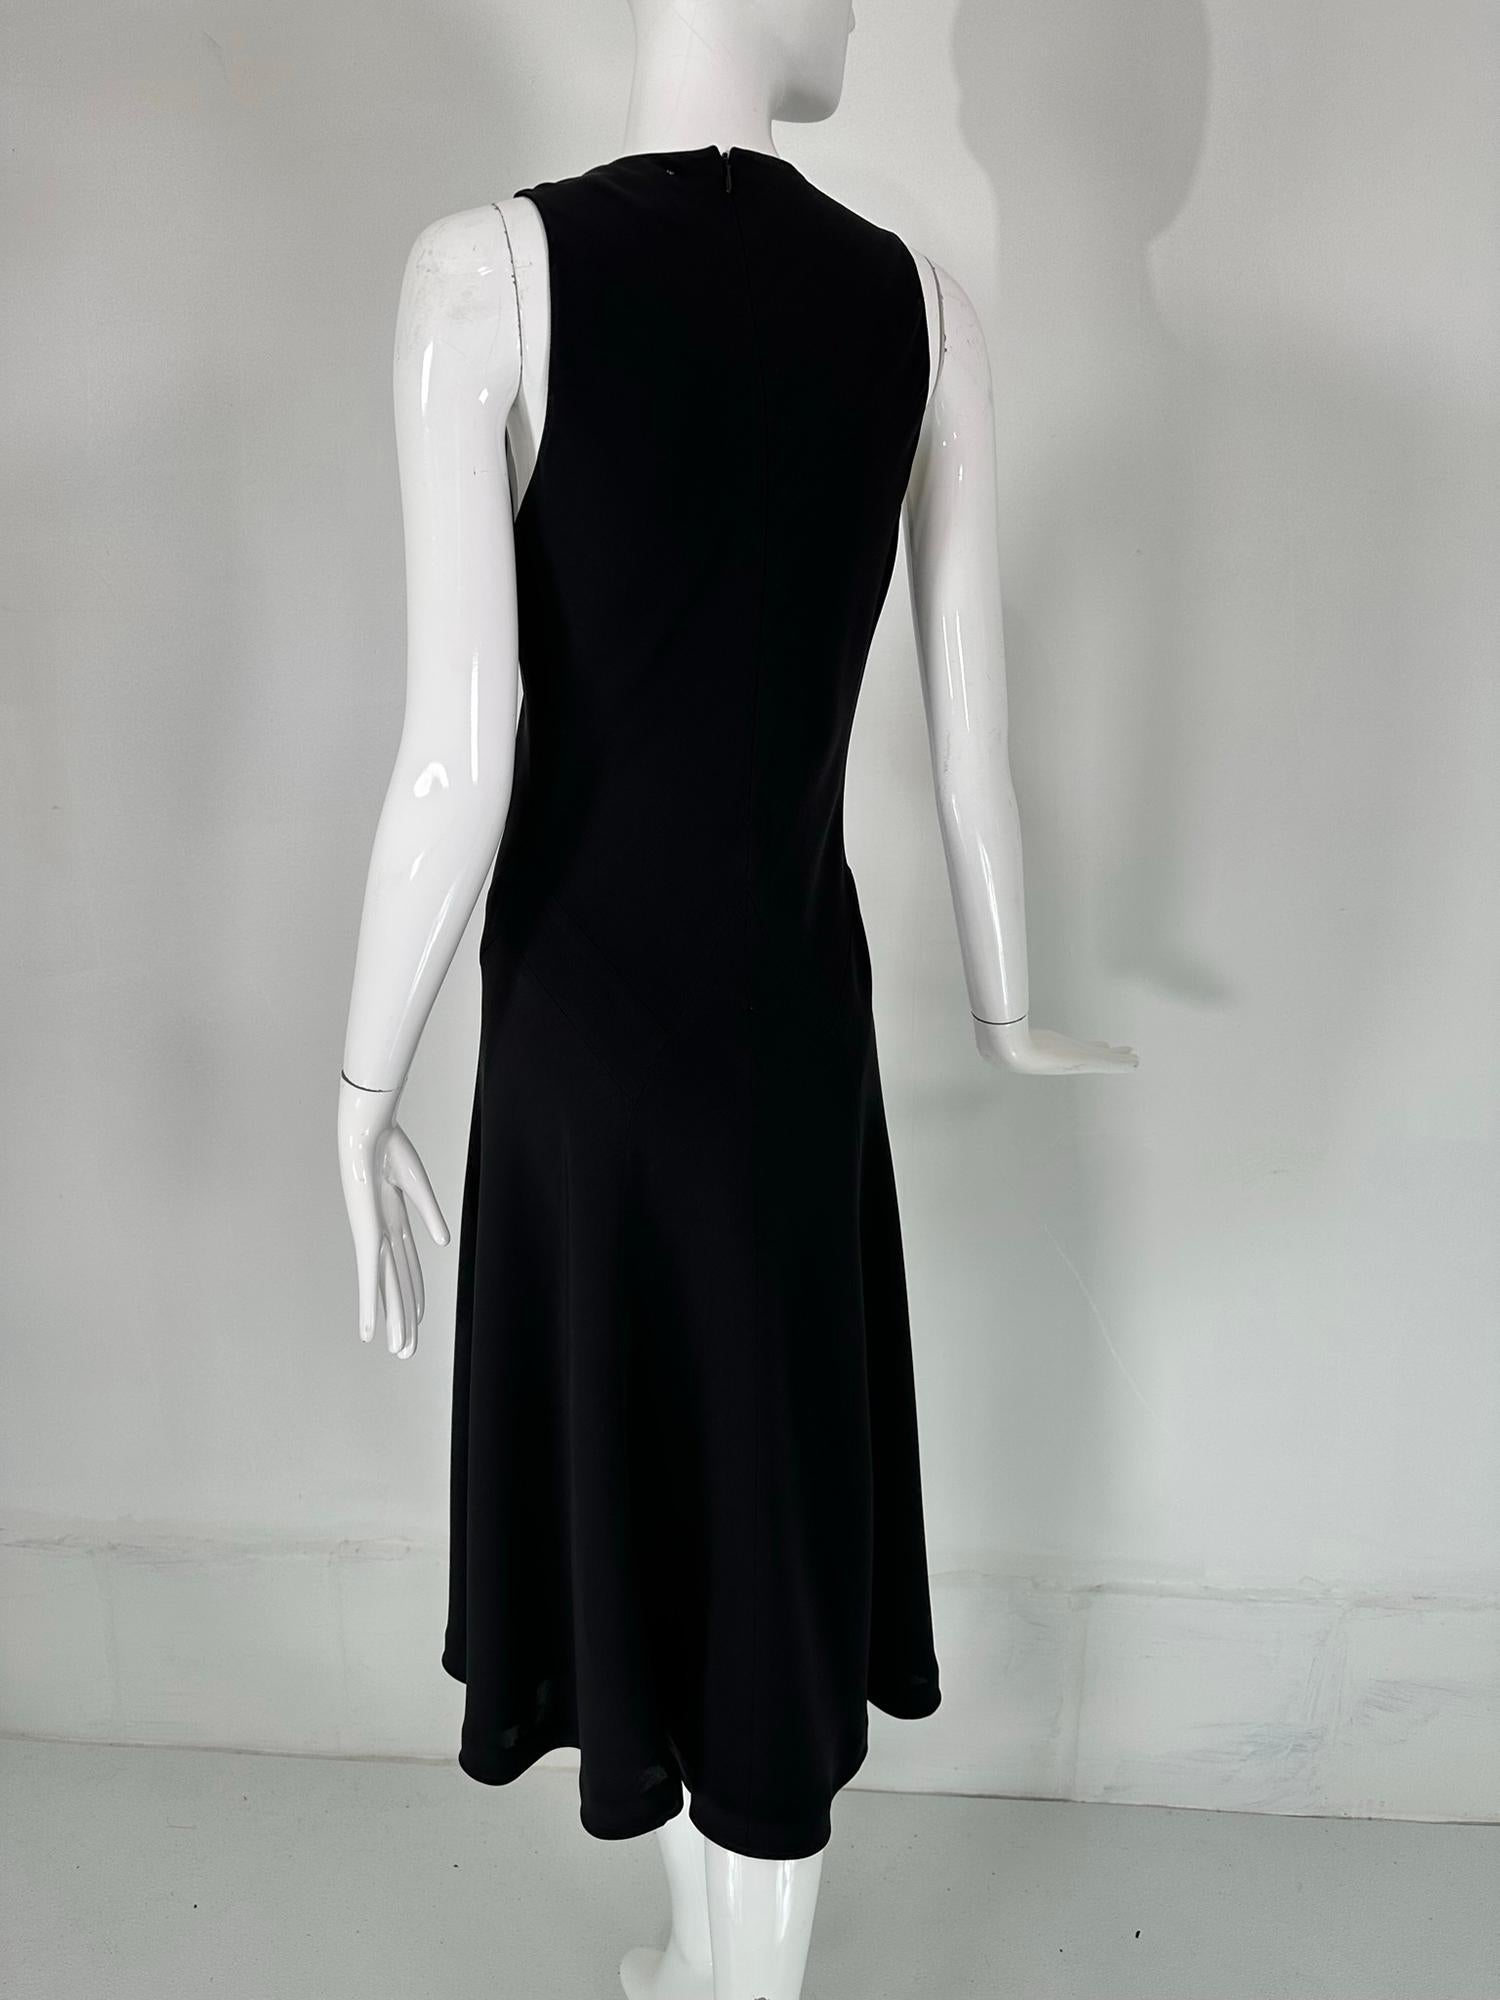 Ralph Lauren Black Label Classic Silk Bias Cut Dress 8 For Sale 4